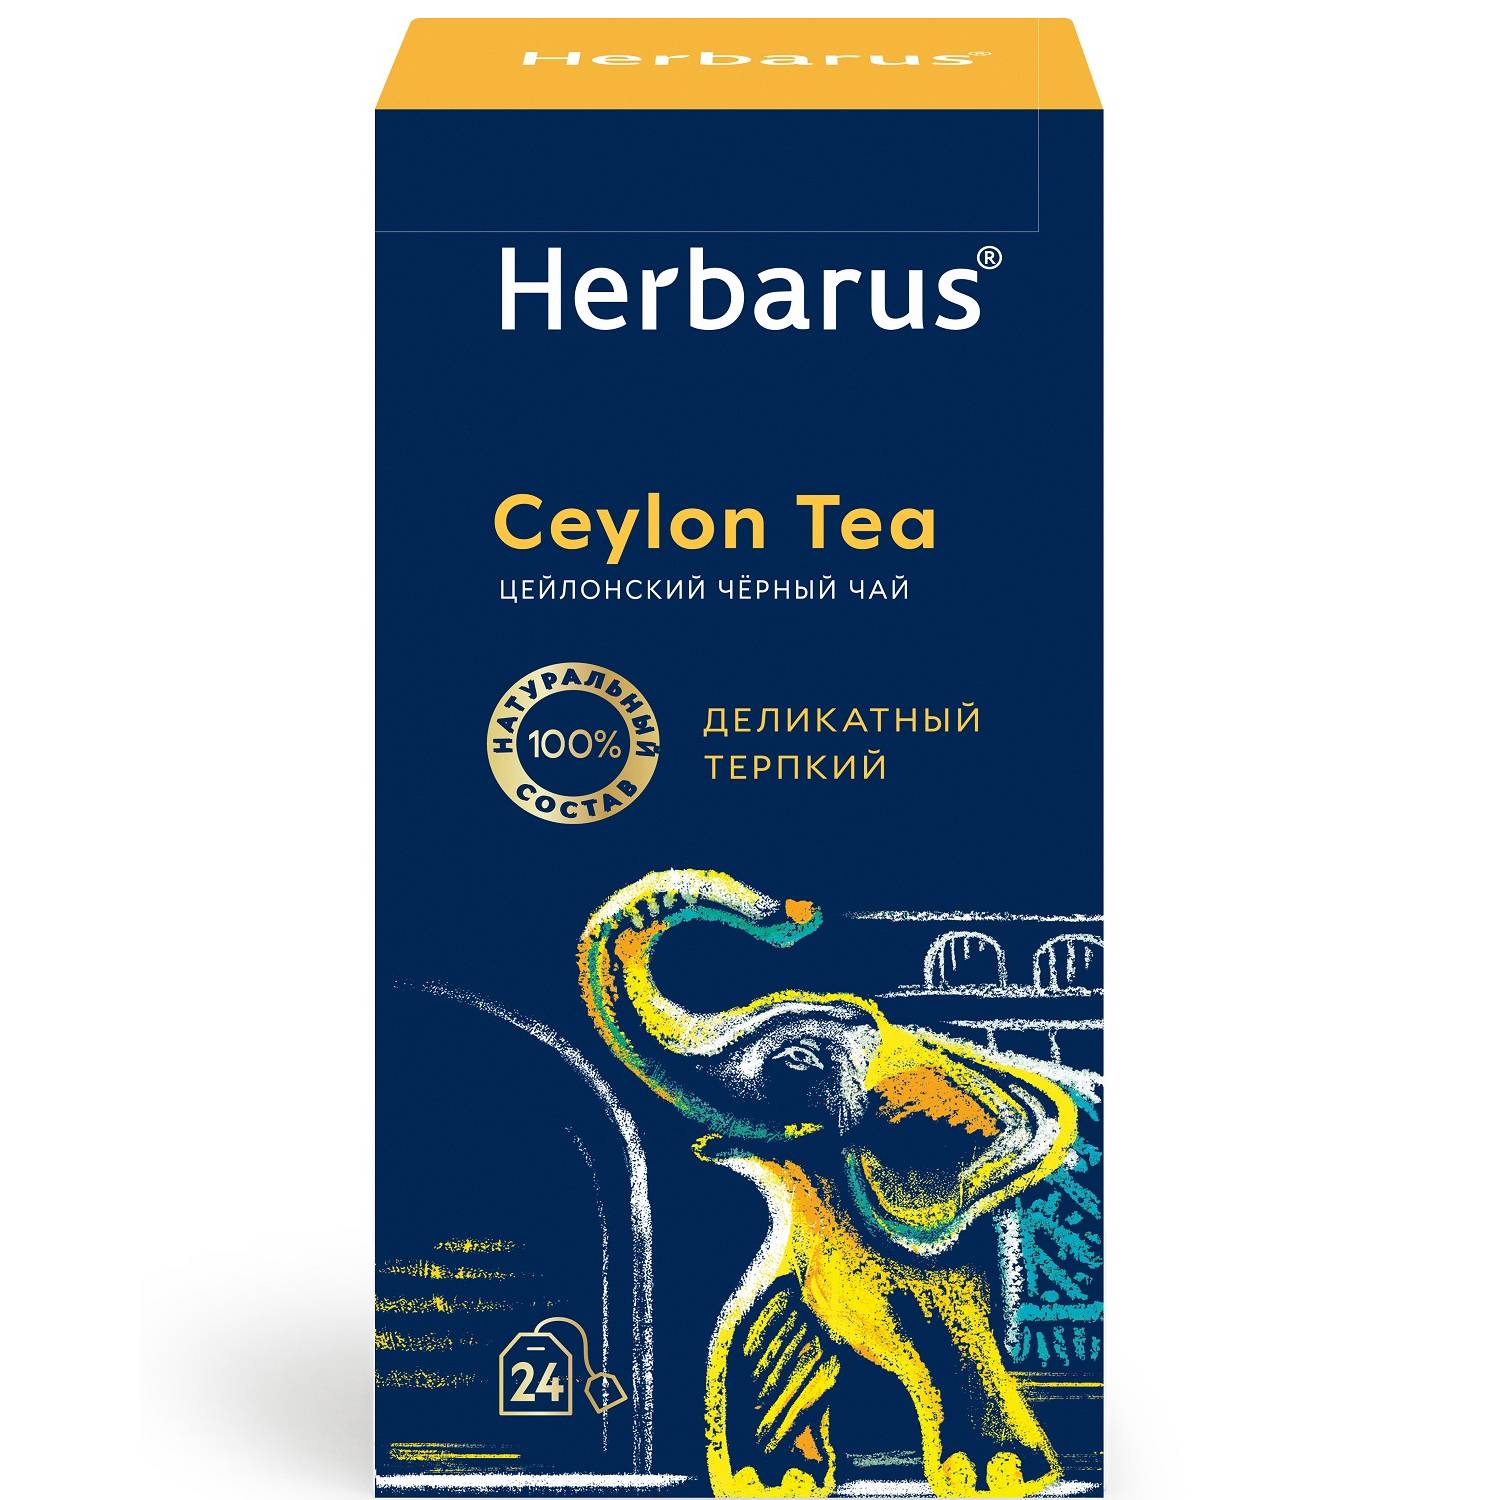 Herbarus Цейлонский черный чай Ceylon Tea, 24 пакетика х 2 г (Herbarus, Классический чай) herbarus чай с добавками ассорти чай черный 24 х 2 г herbarus чай с добавками